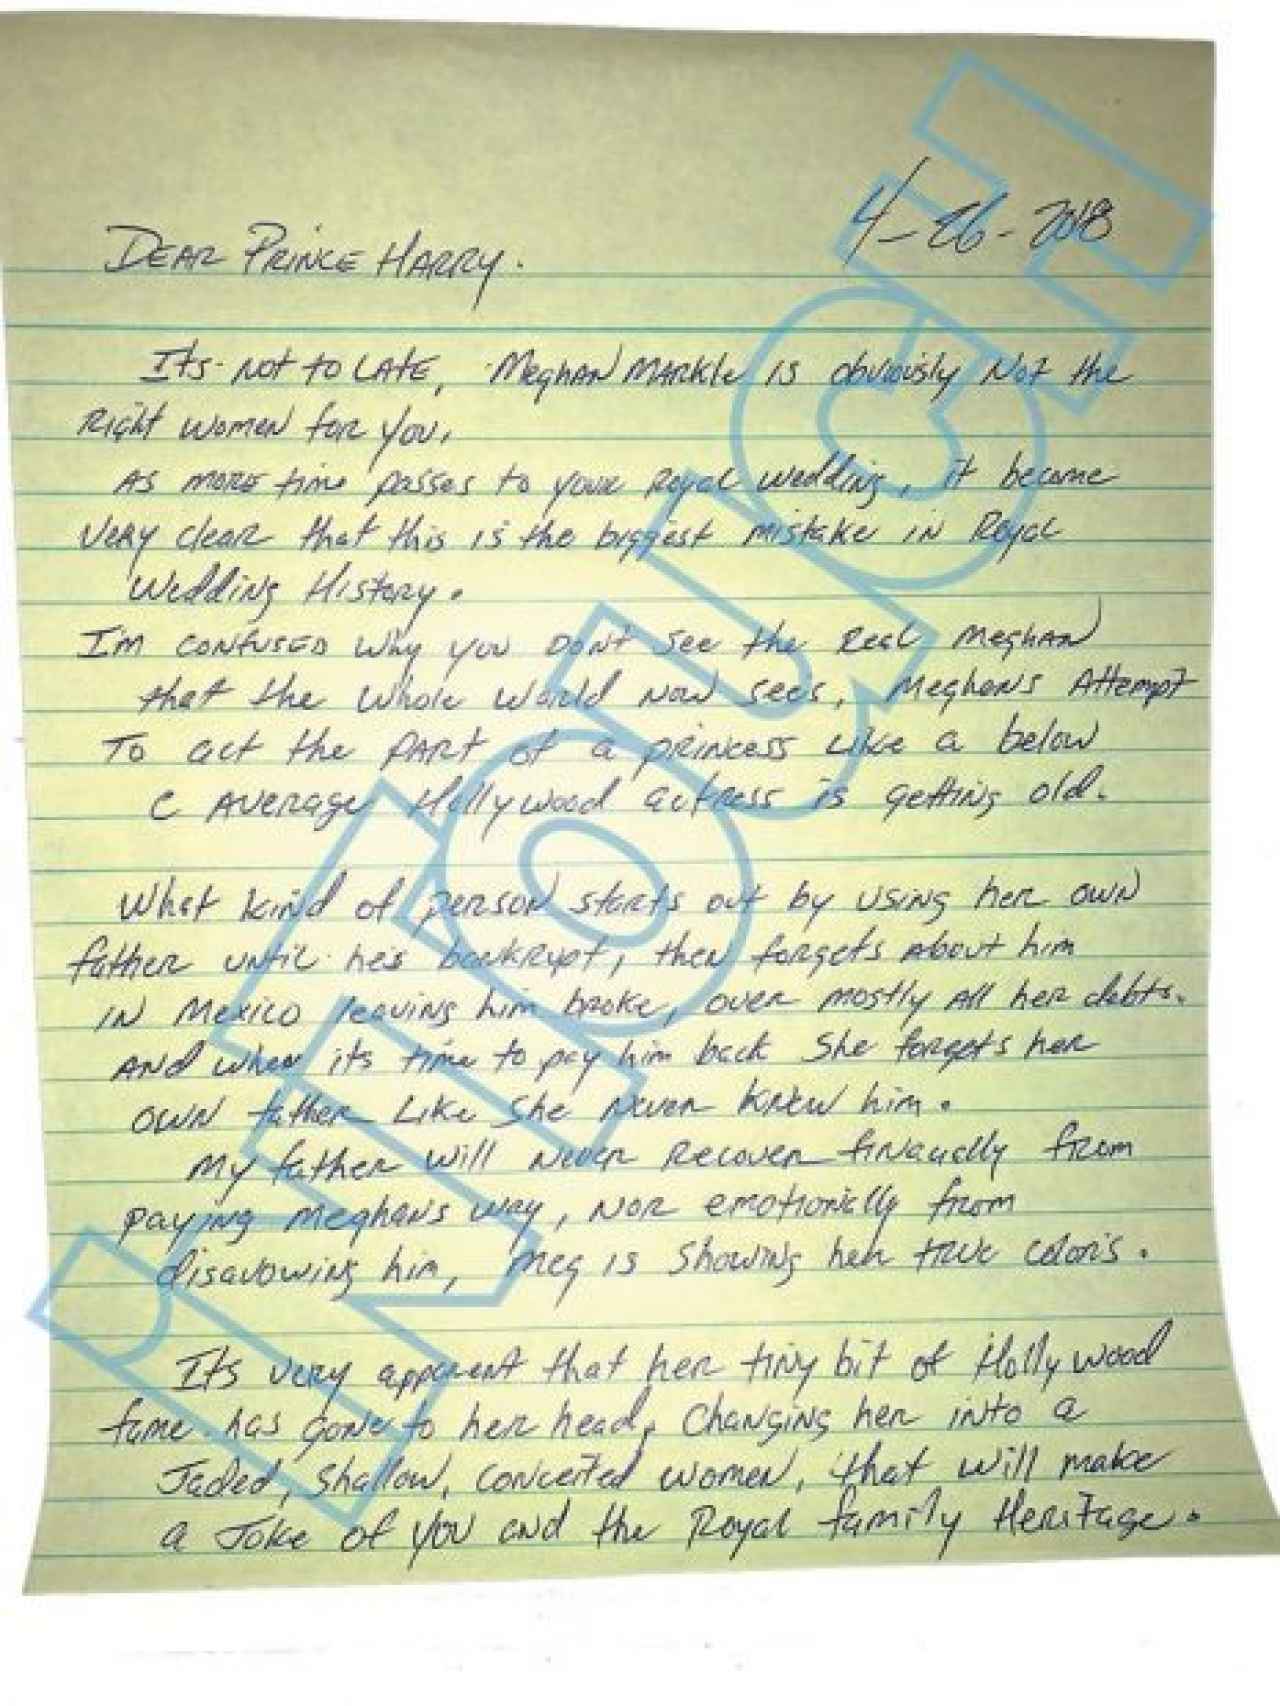 Carta de Thomas Markle dirigida a Harry.